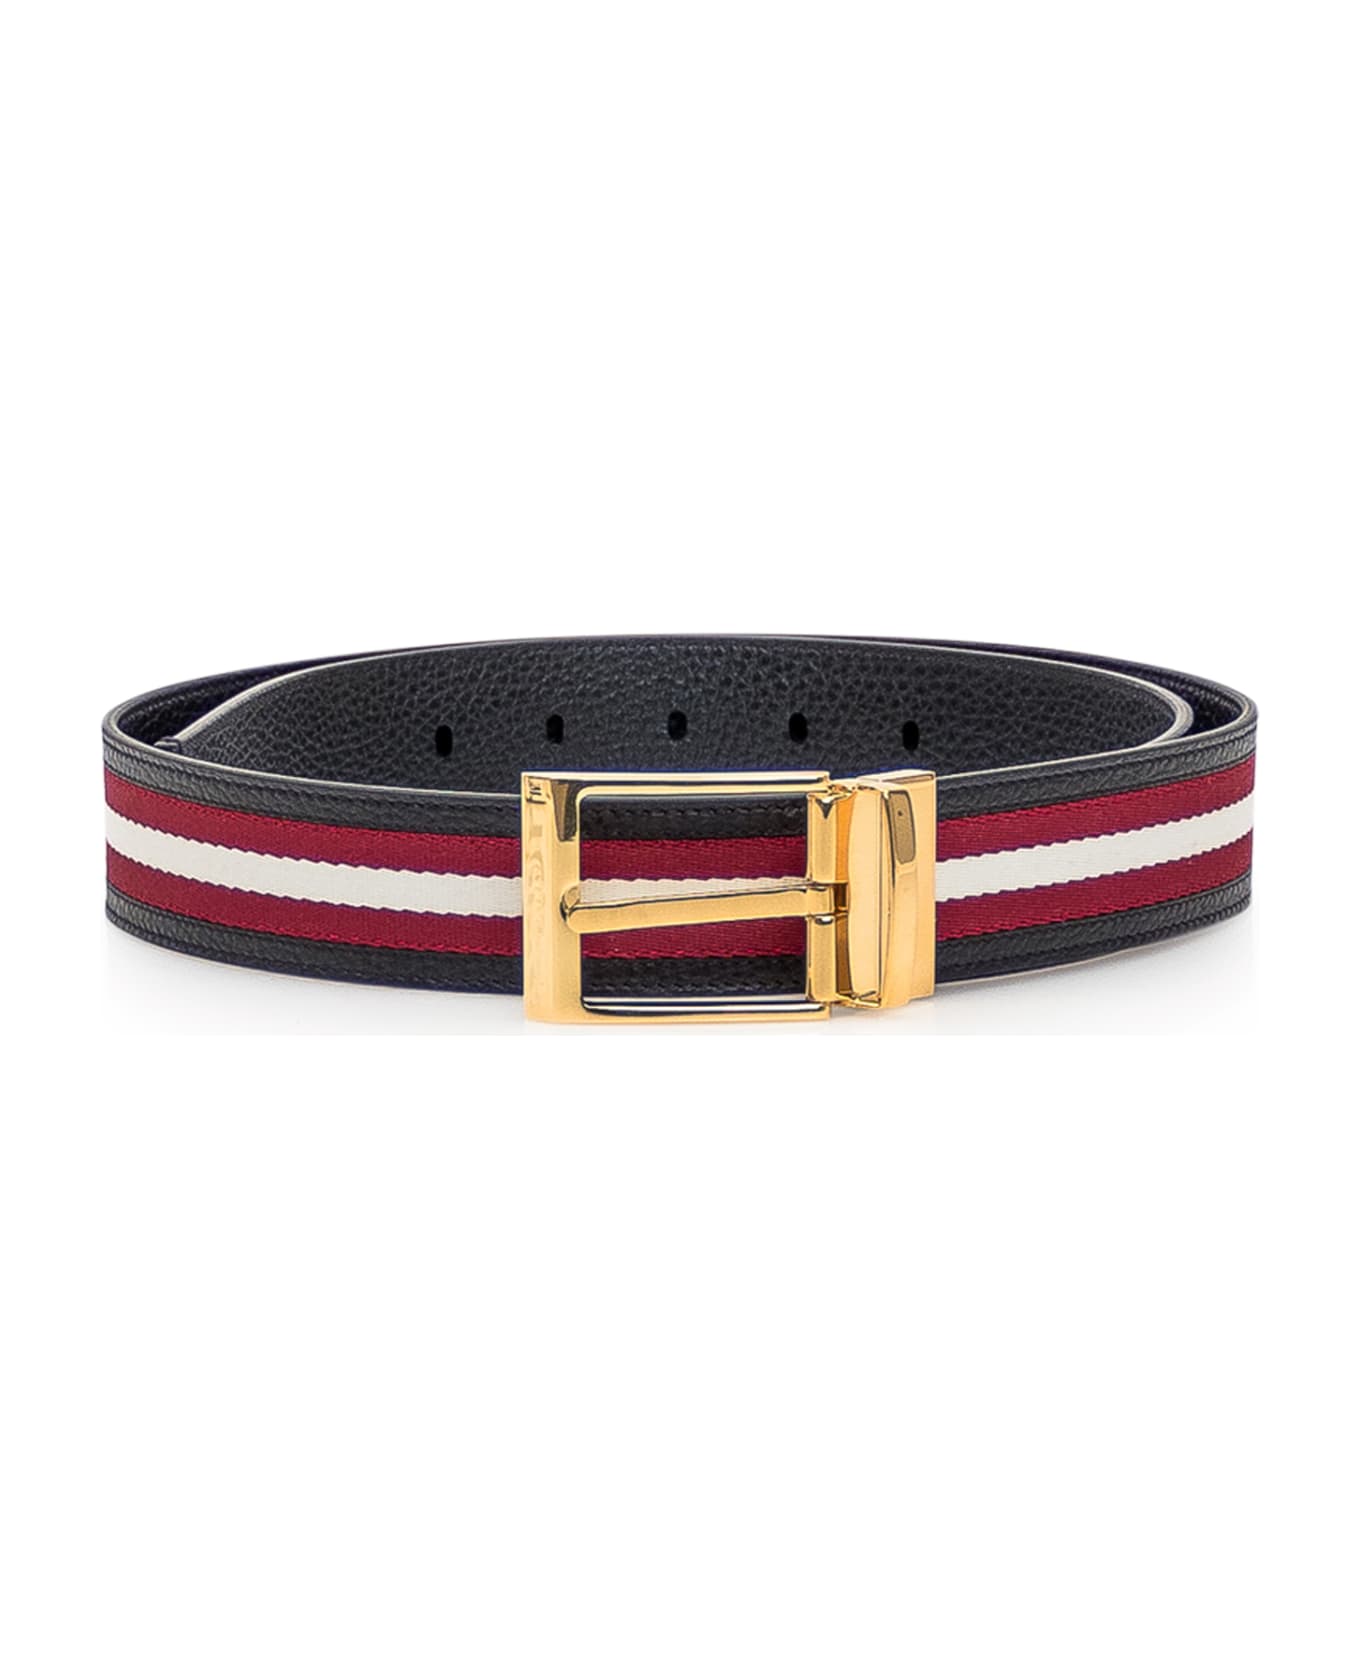 Bally Leather Belt - BLACK+RED/BONE+PALL